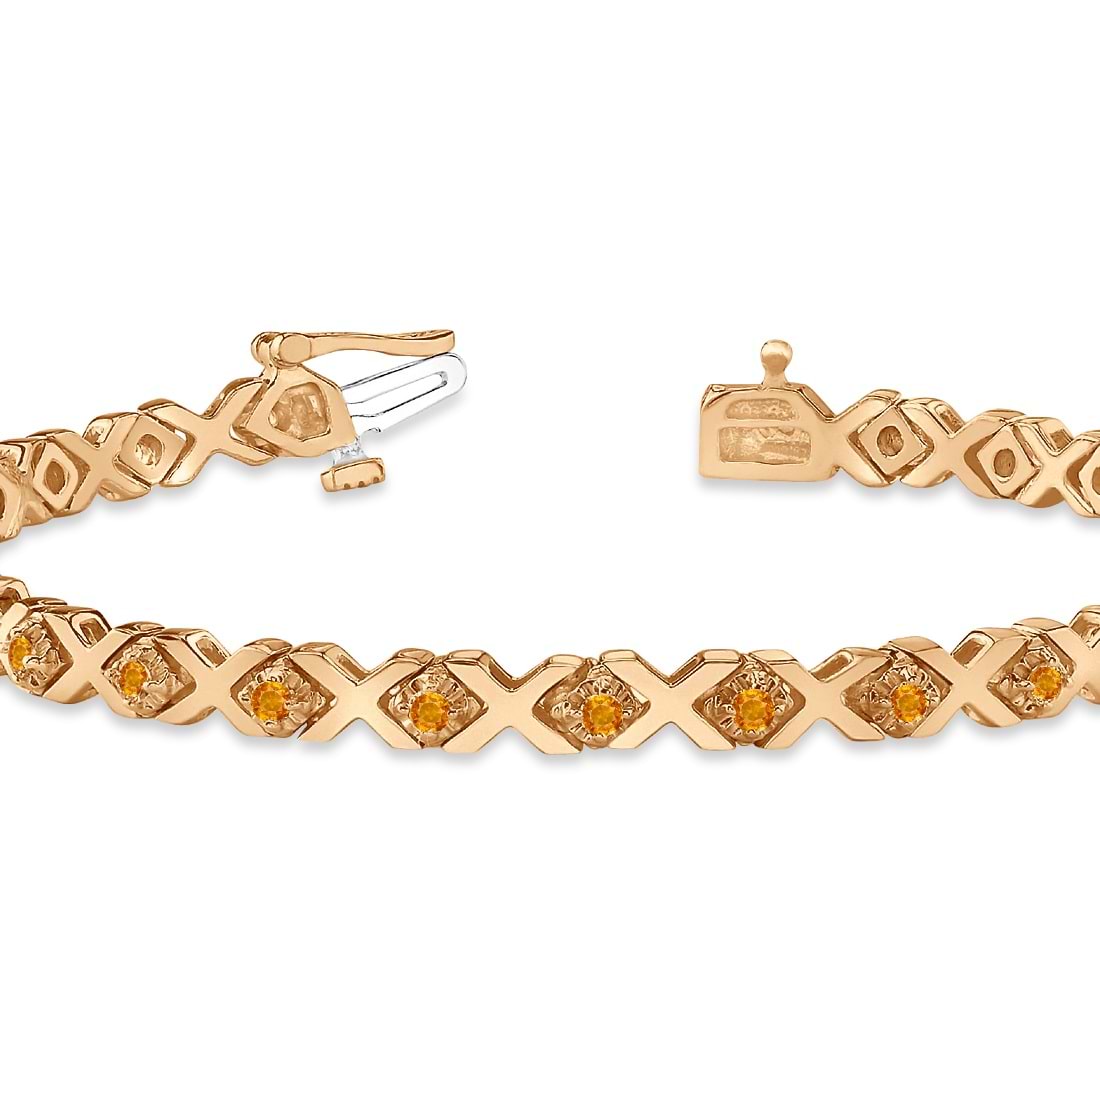 Citrine XOXO Chained Line Bracelet 14k Rose Gold (1.50ct)